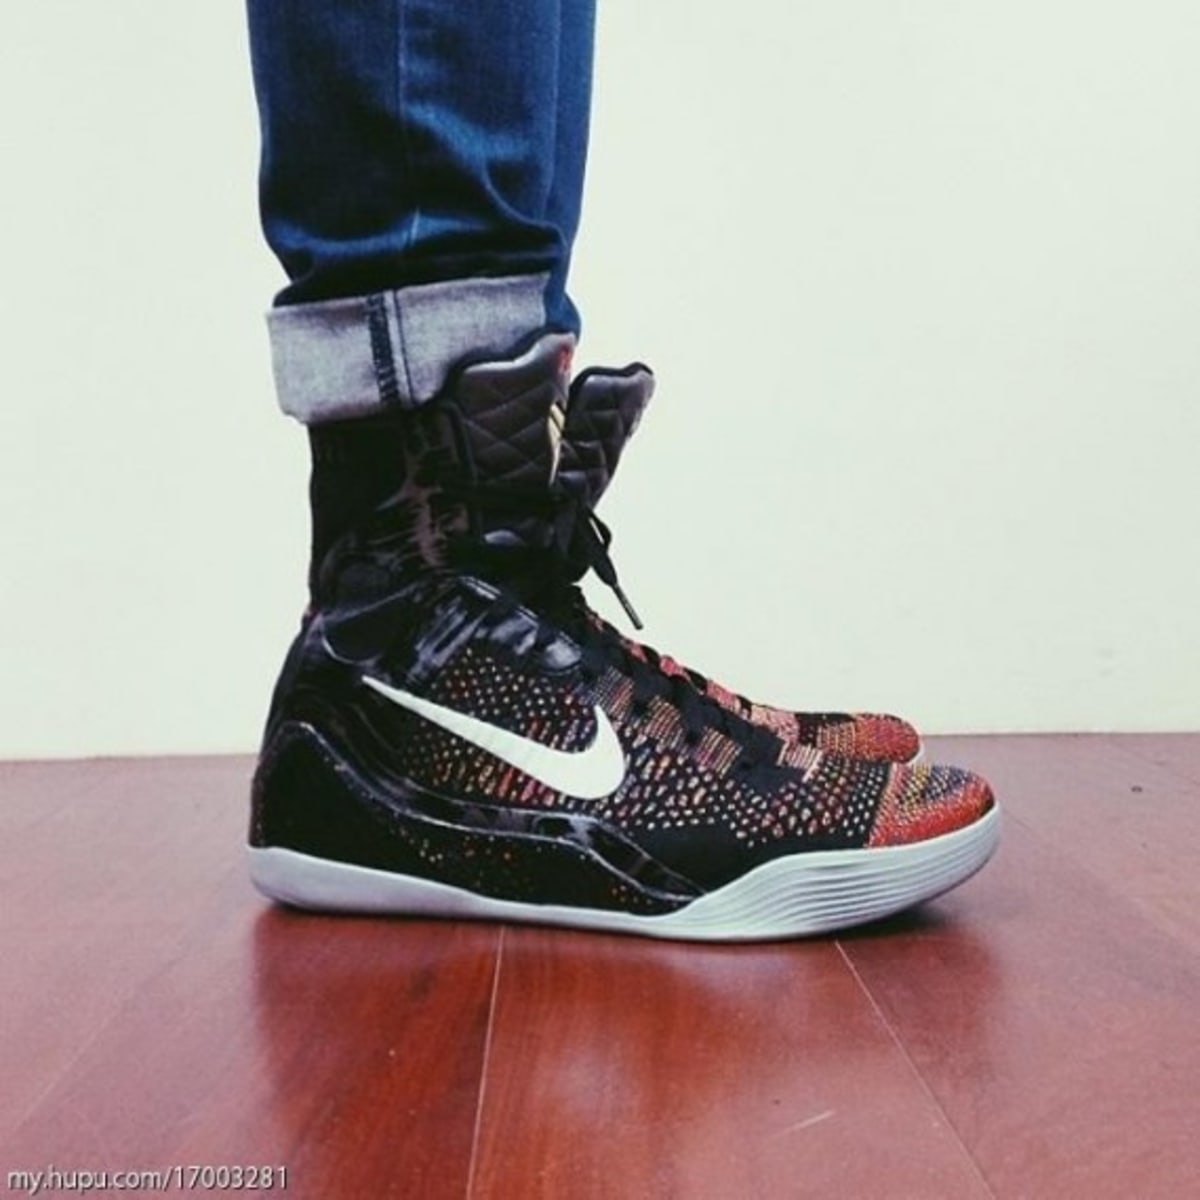 See What the Nike Kobe 9 Looks Like On-Foot | Complex1200 x 1200